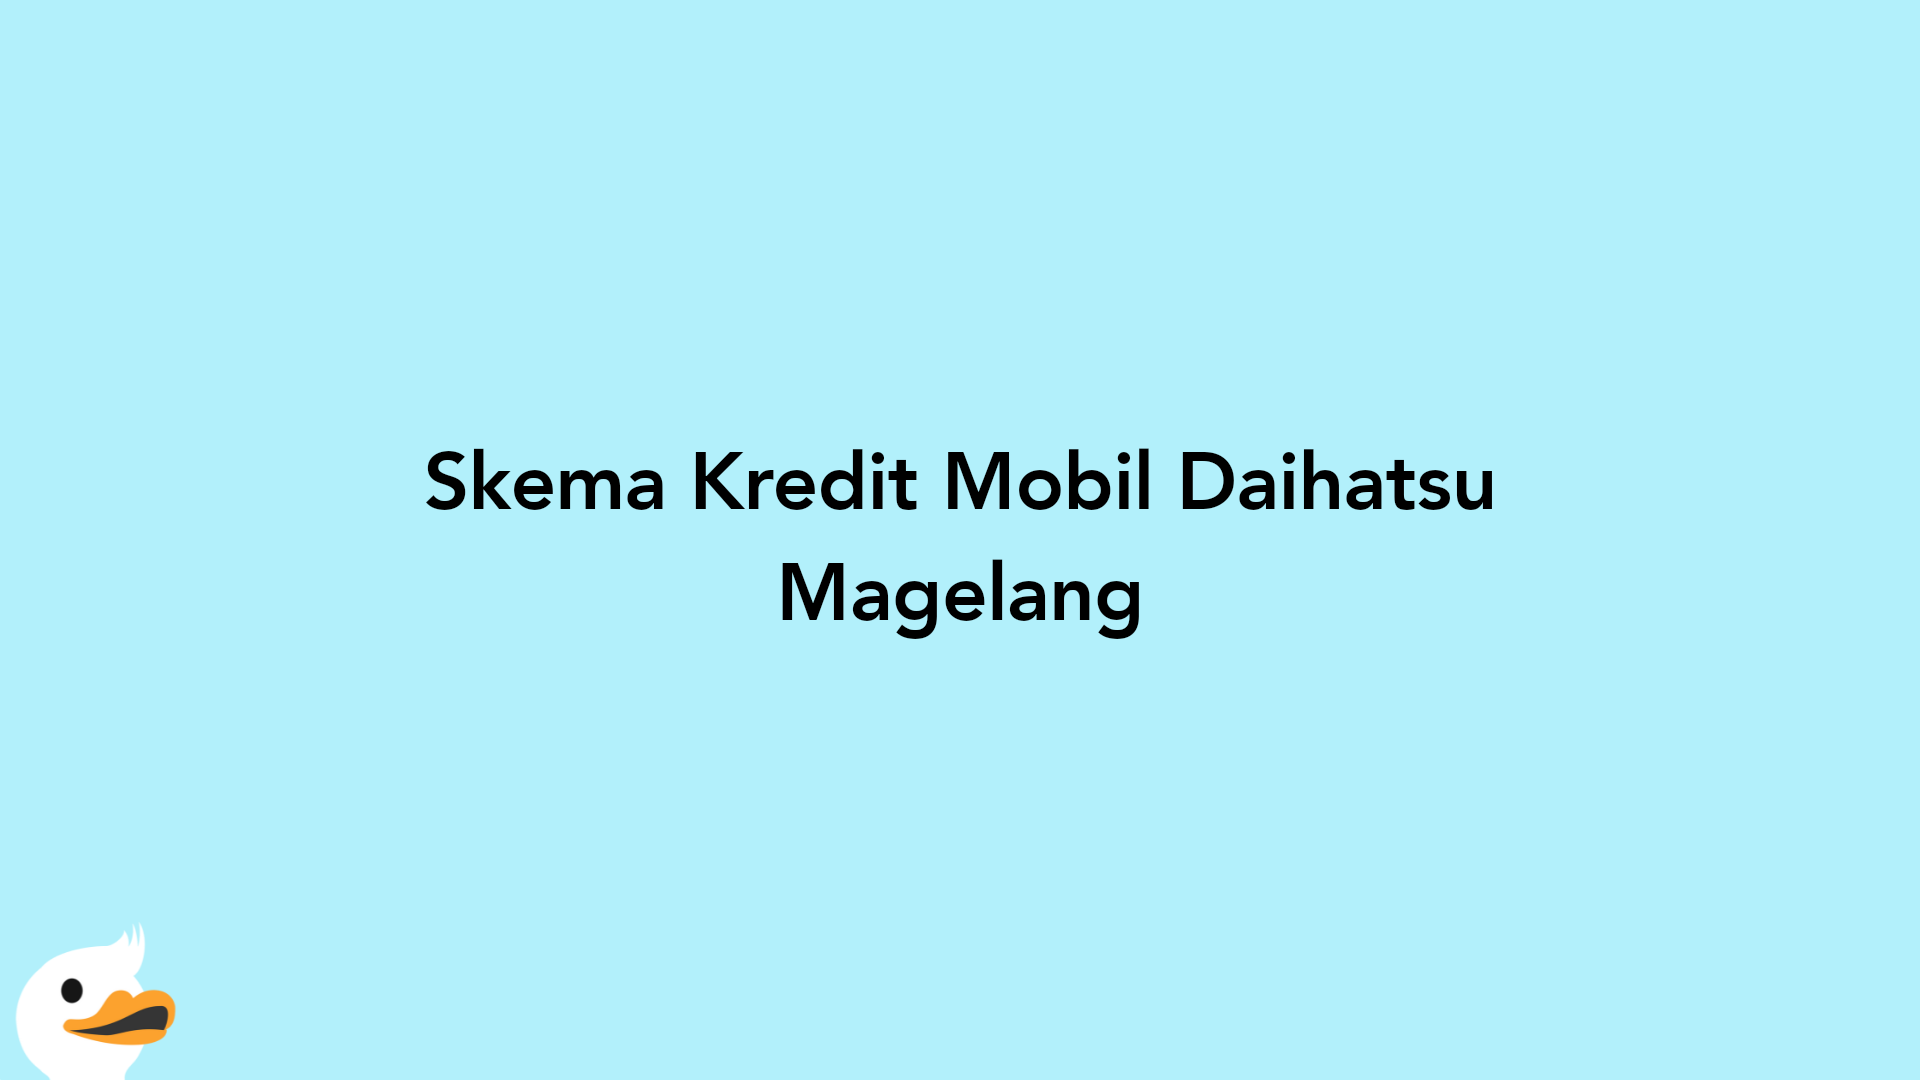 Skema Kredit Mobil Daihatsu Magelang